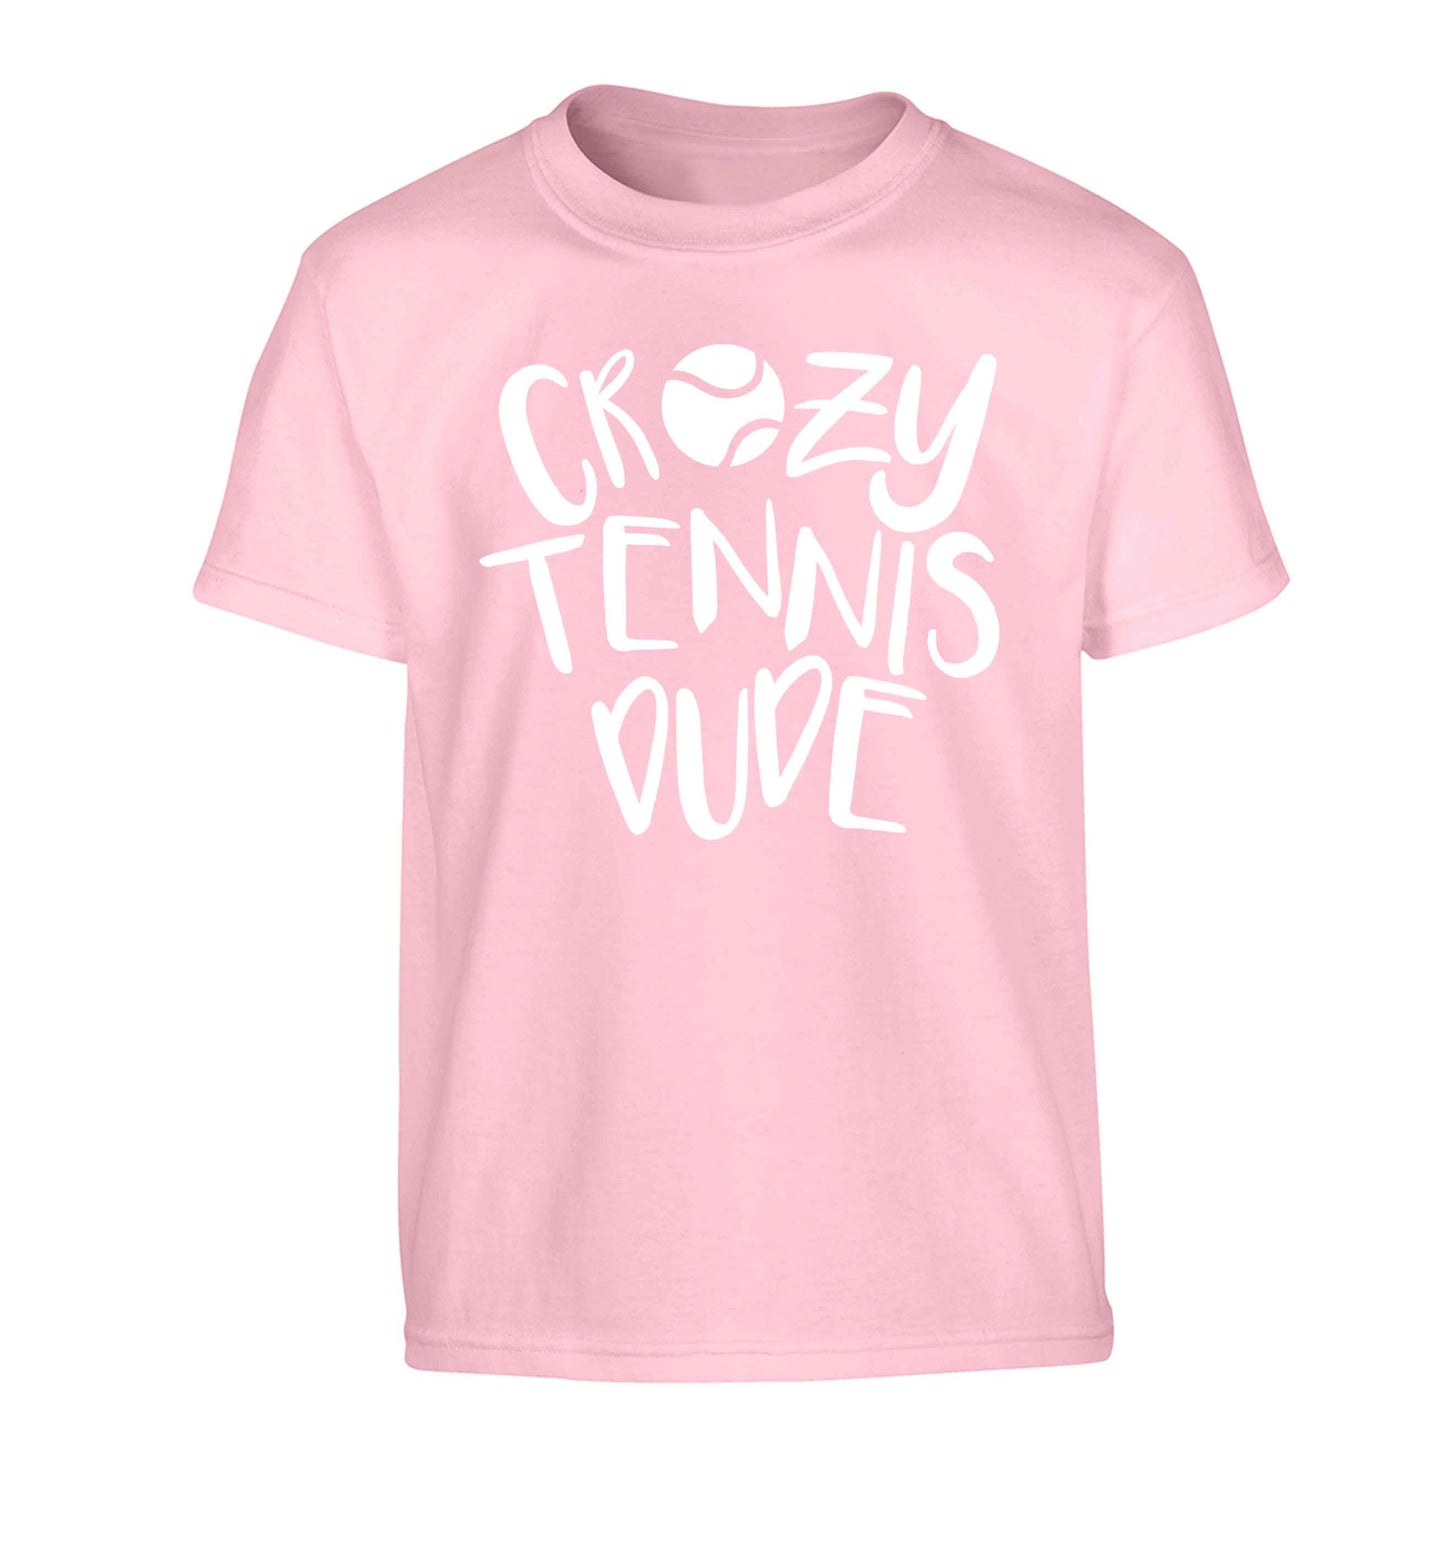 Crazy tennis dude Children's light pink Tshirt 12-13 Years